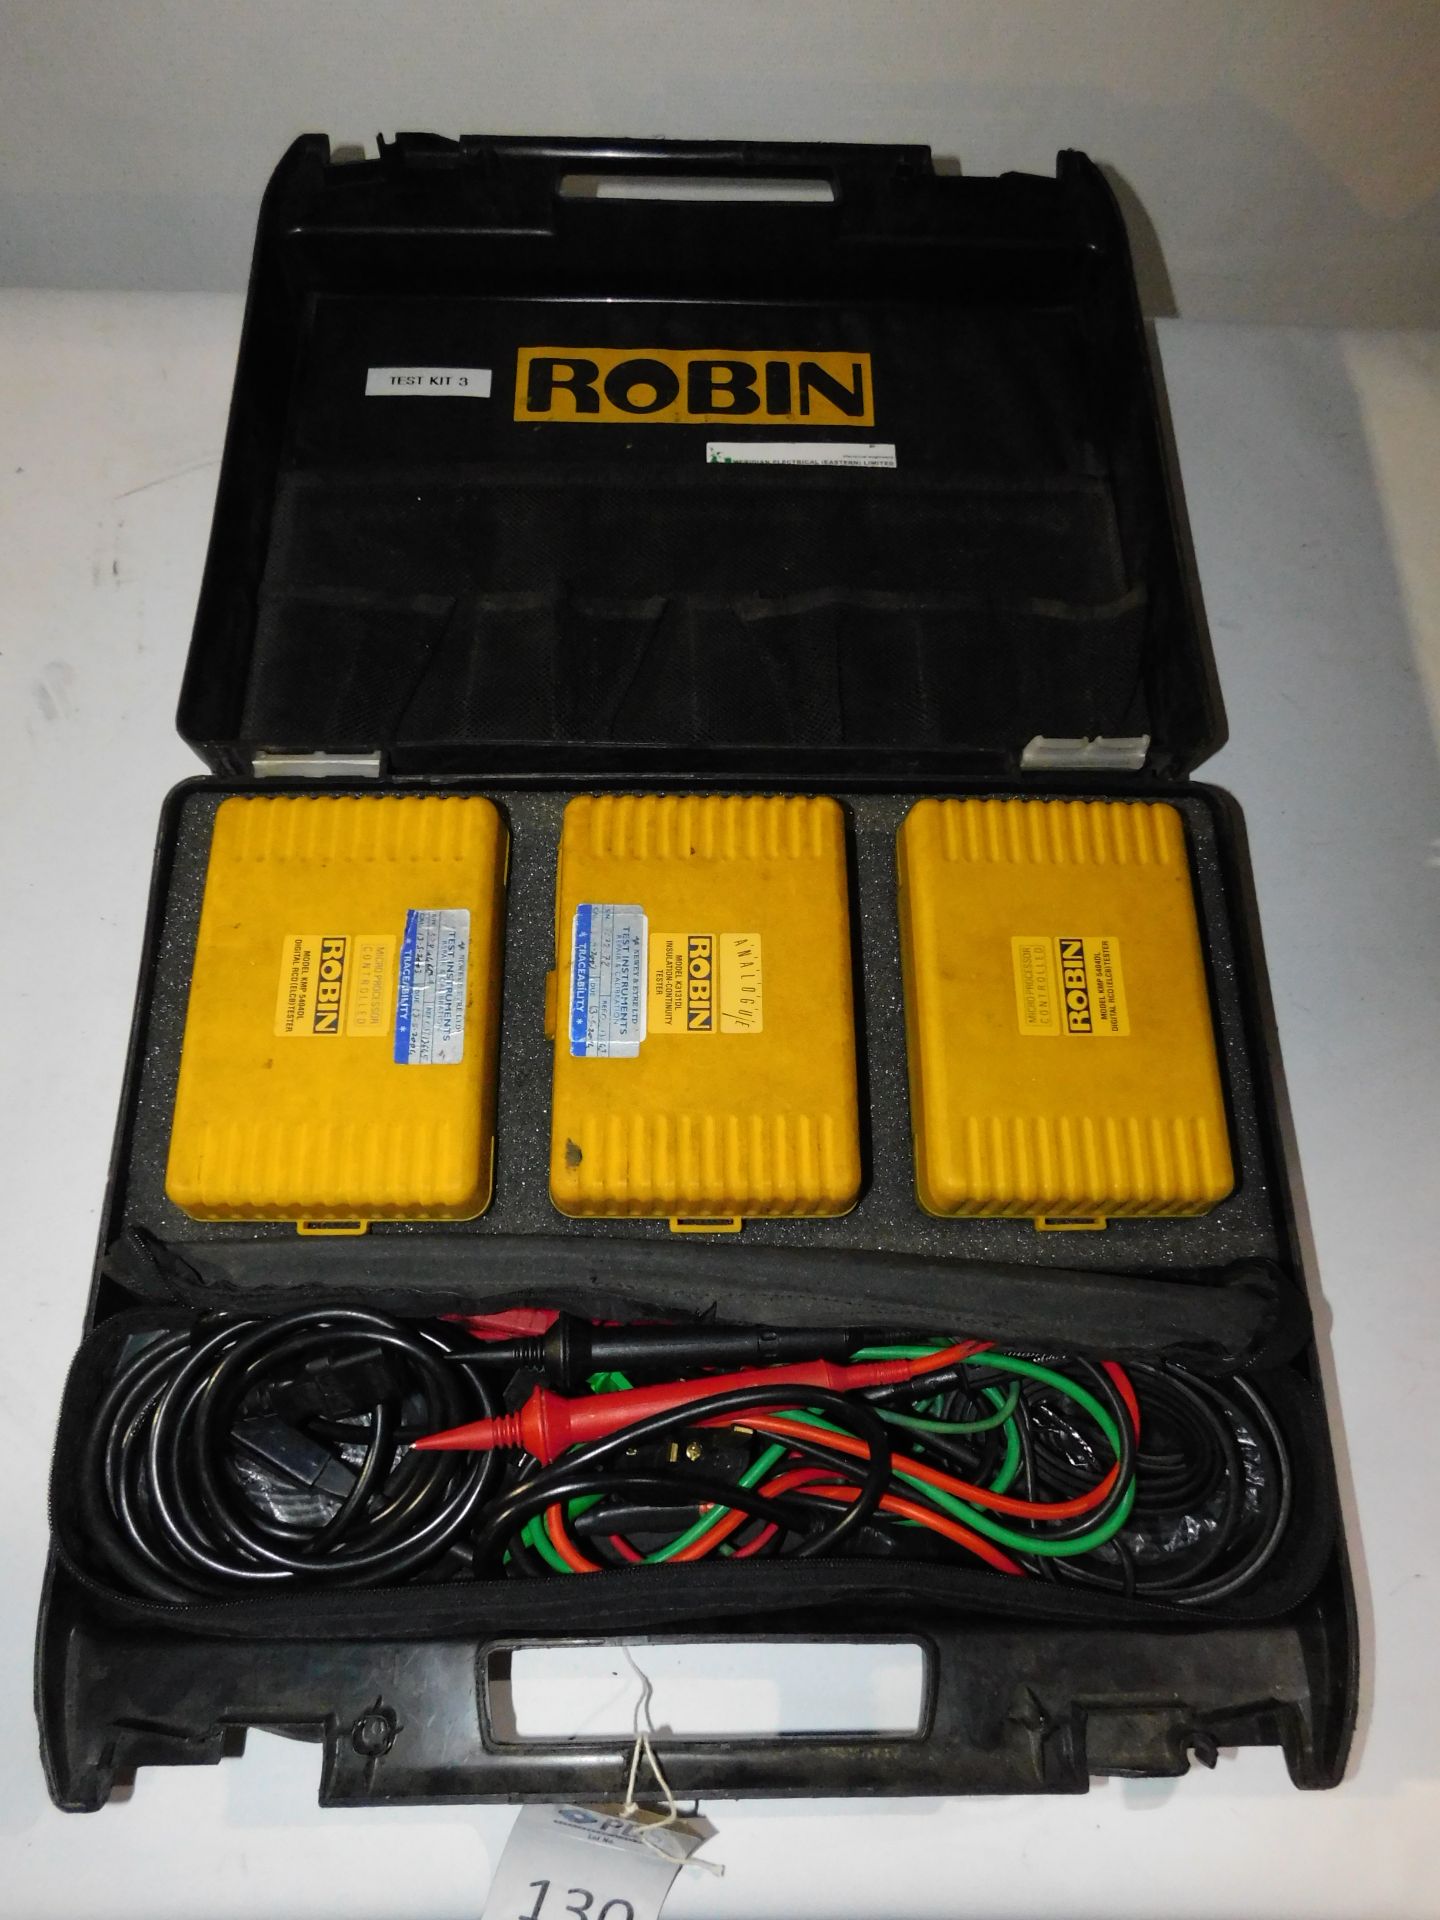 Robin Electrical Test Set Comprising: K3131DL Insulation Continuity Tester, KMP5404DL RCD Tester & a